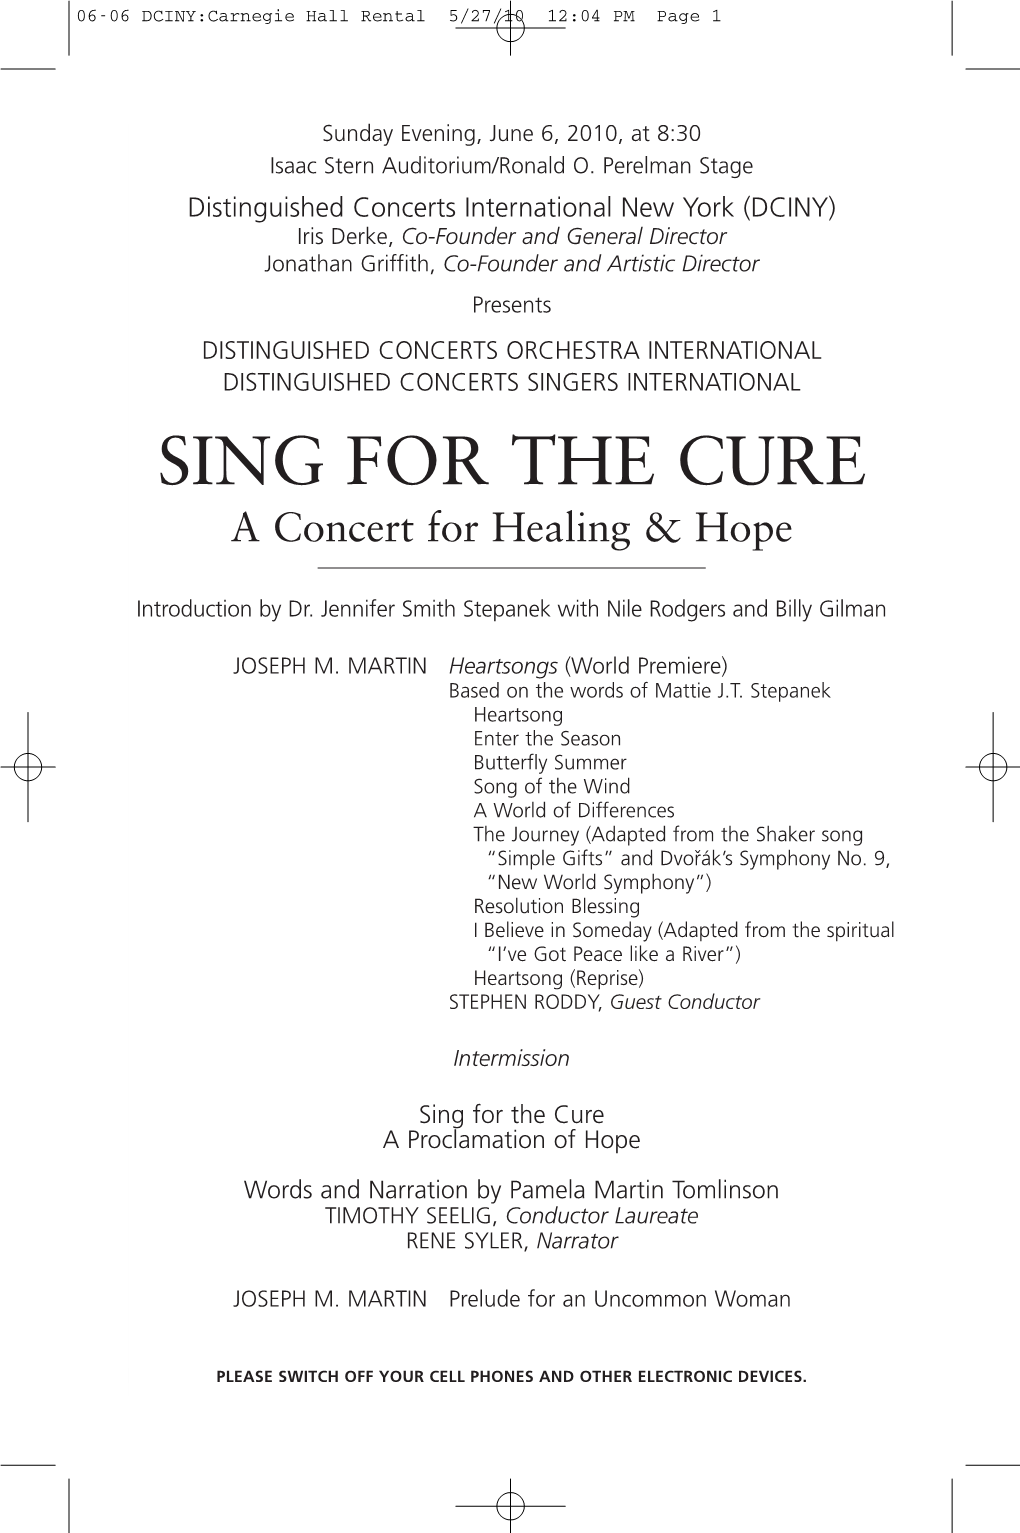 Carnegie Hall Rental 5/27/10 12:04 PM Page 1